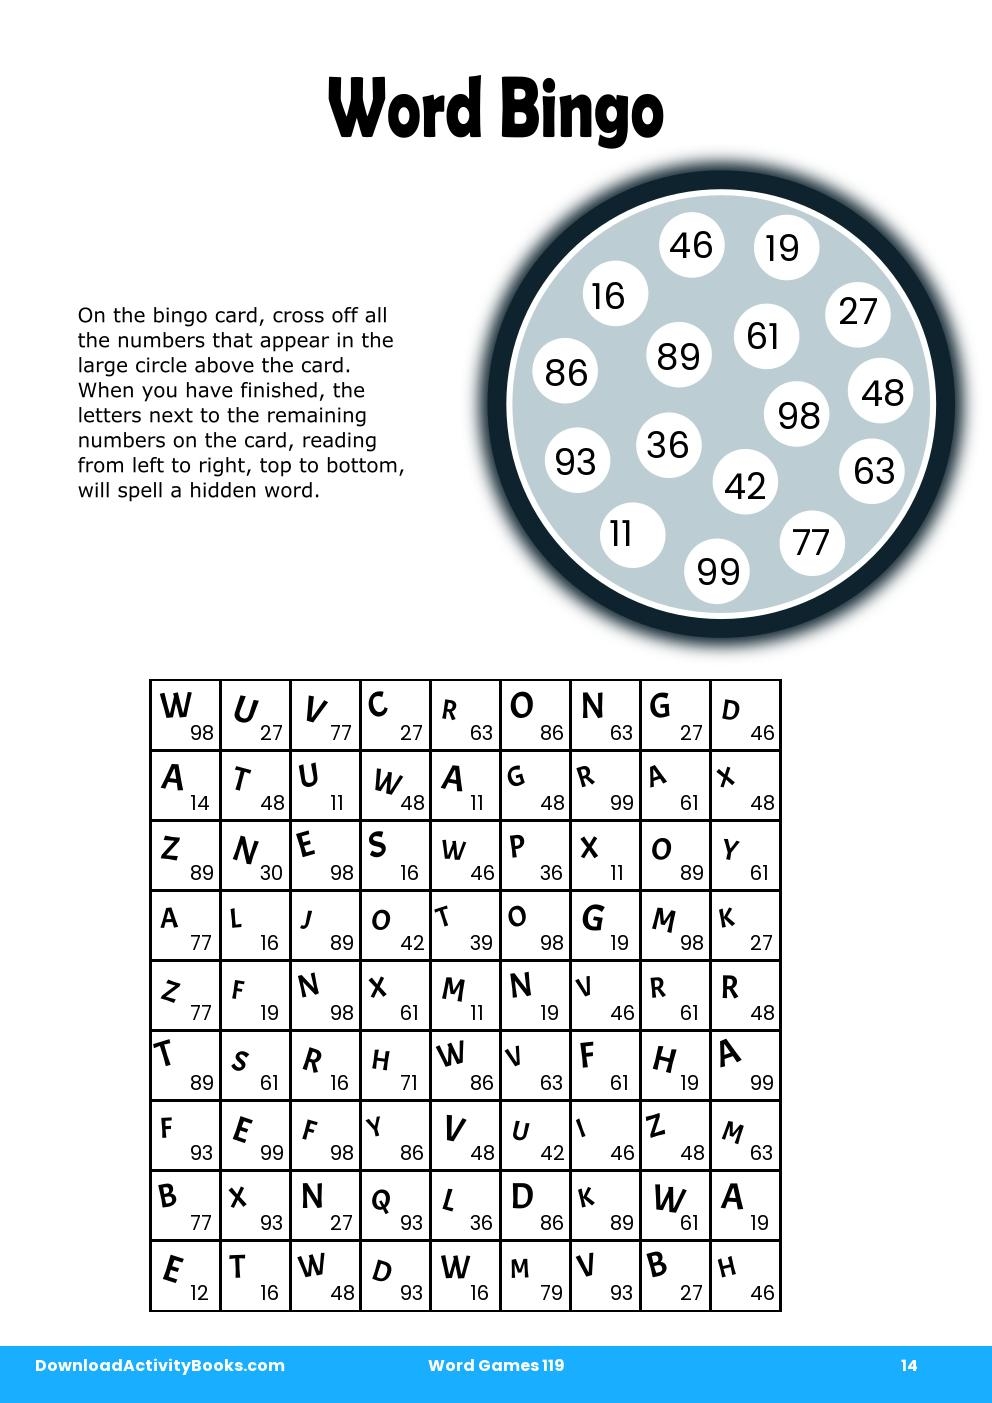 Word Bingo in Word Games 119